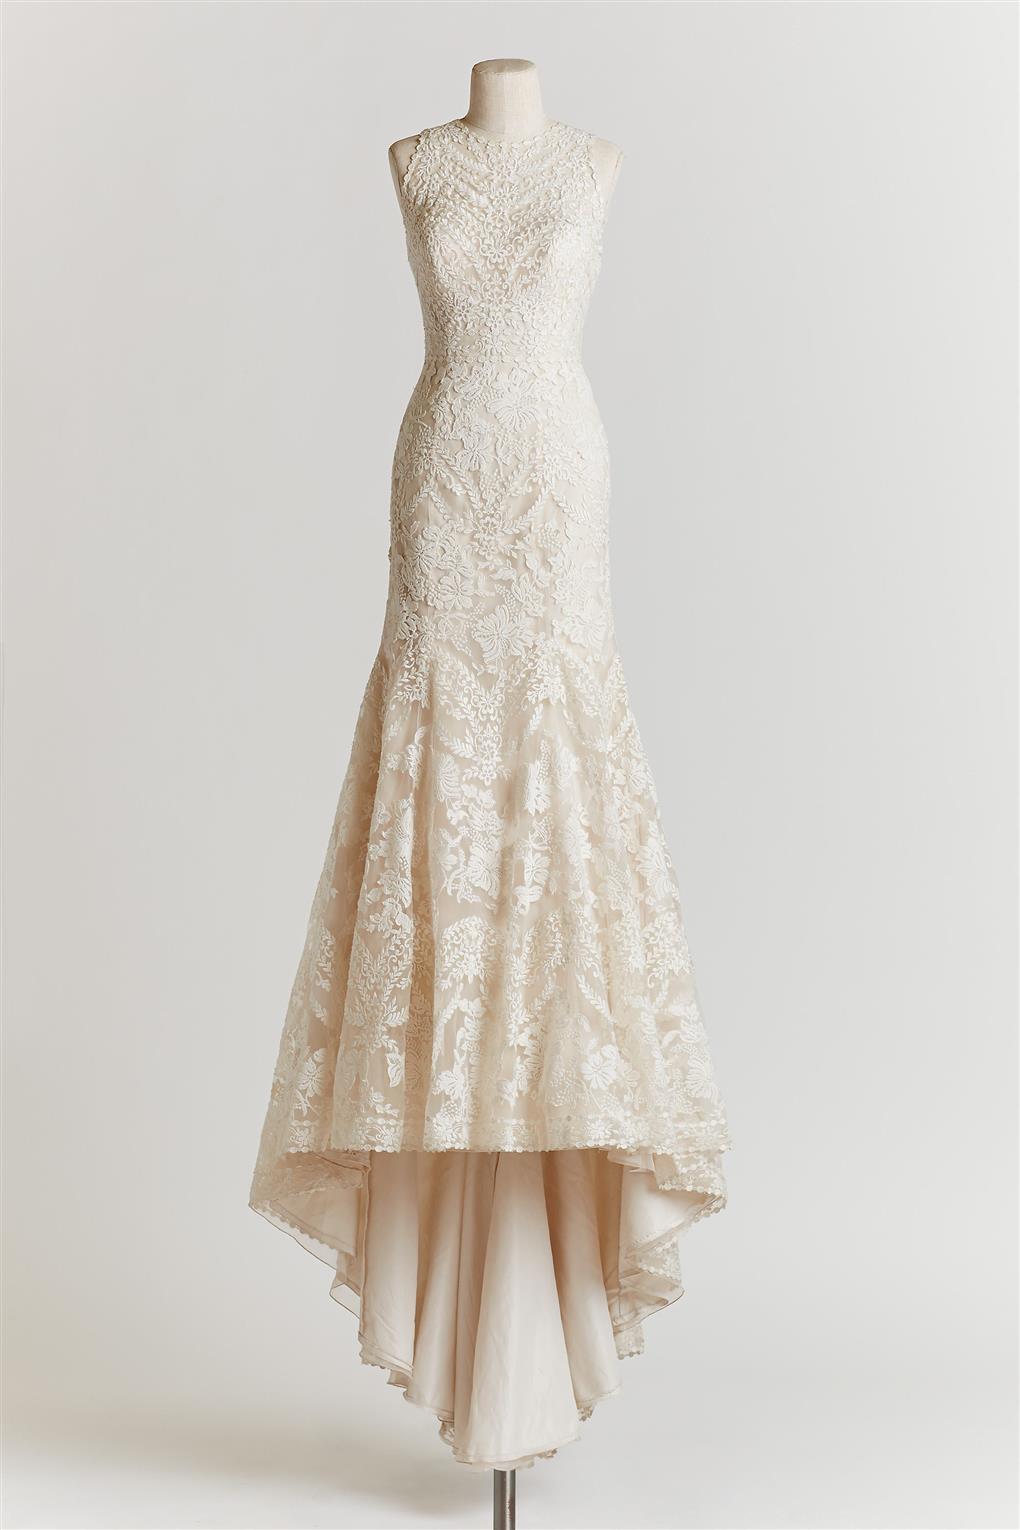 Adalynn Wedding Dress from BHLDNs Spring 2015 Collection